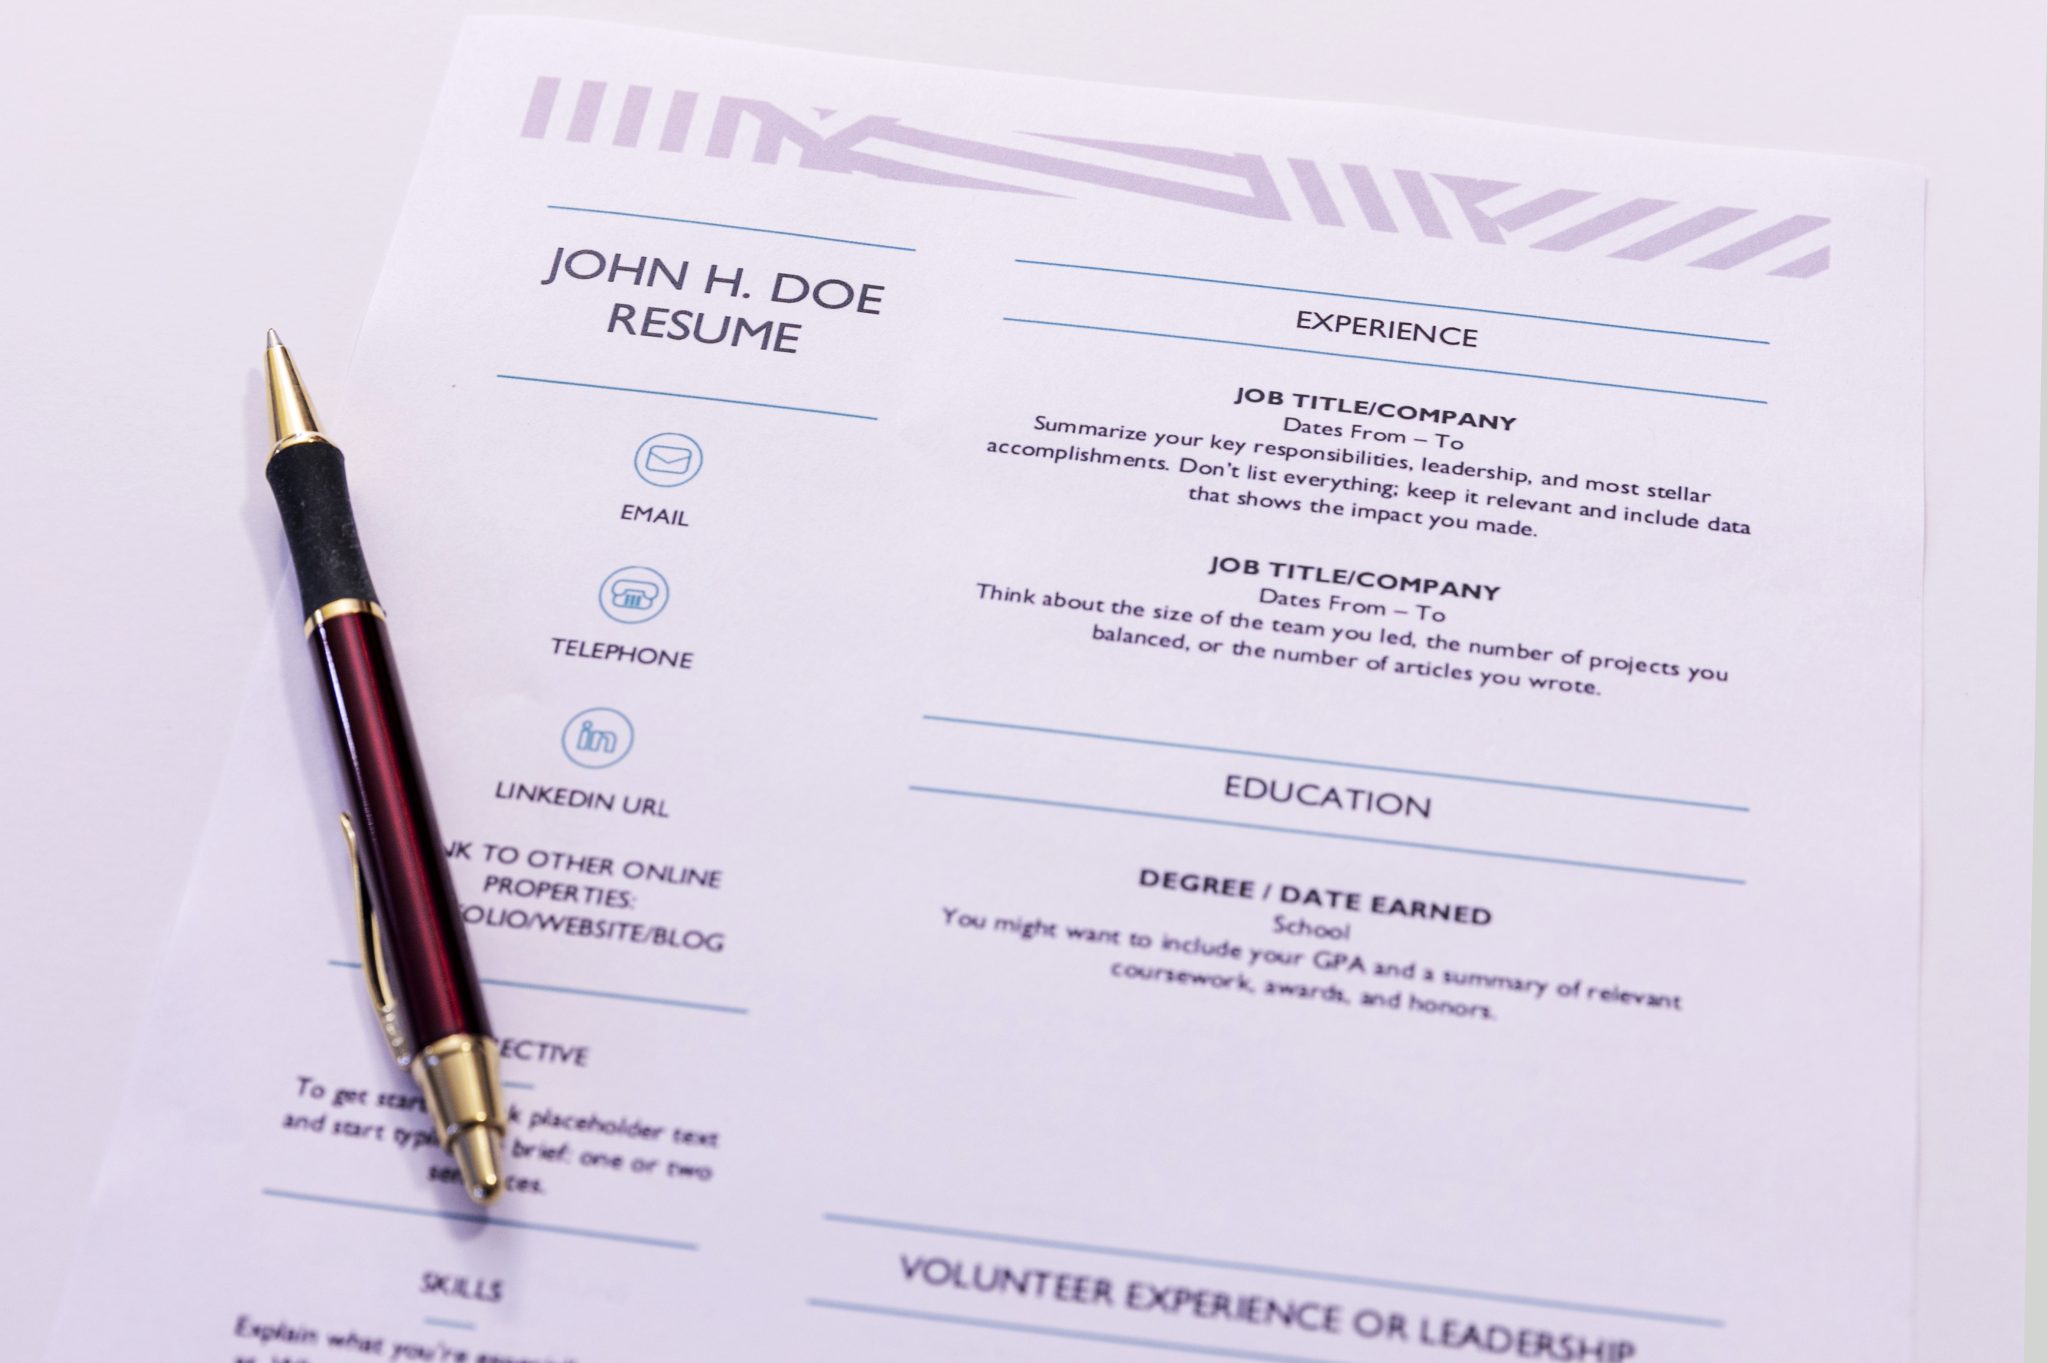 a resumé for John H. Doe on a desk with a pen